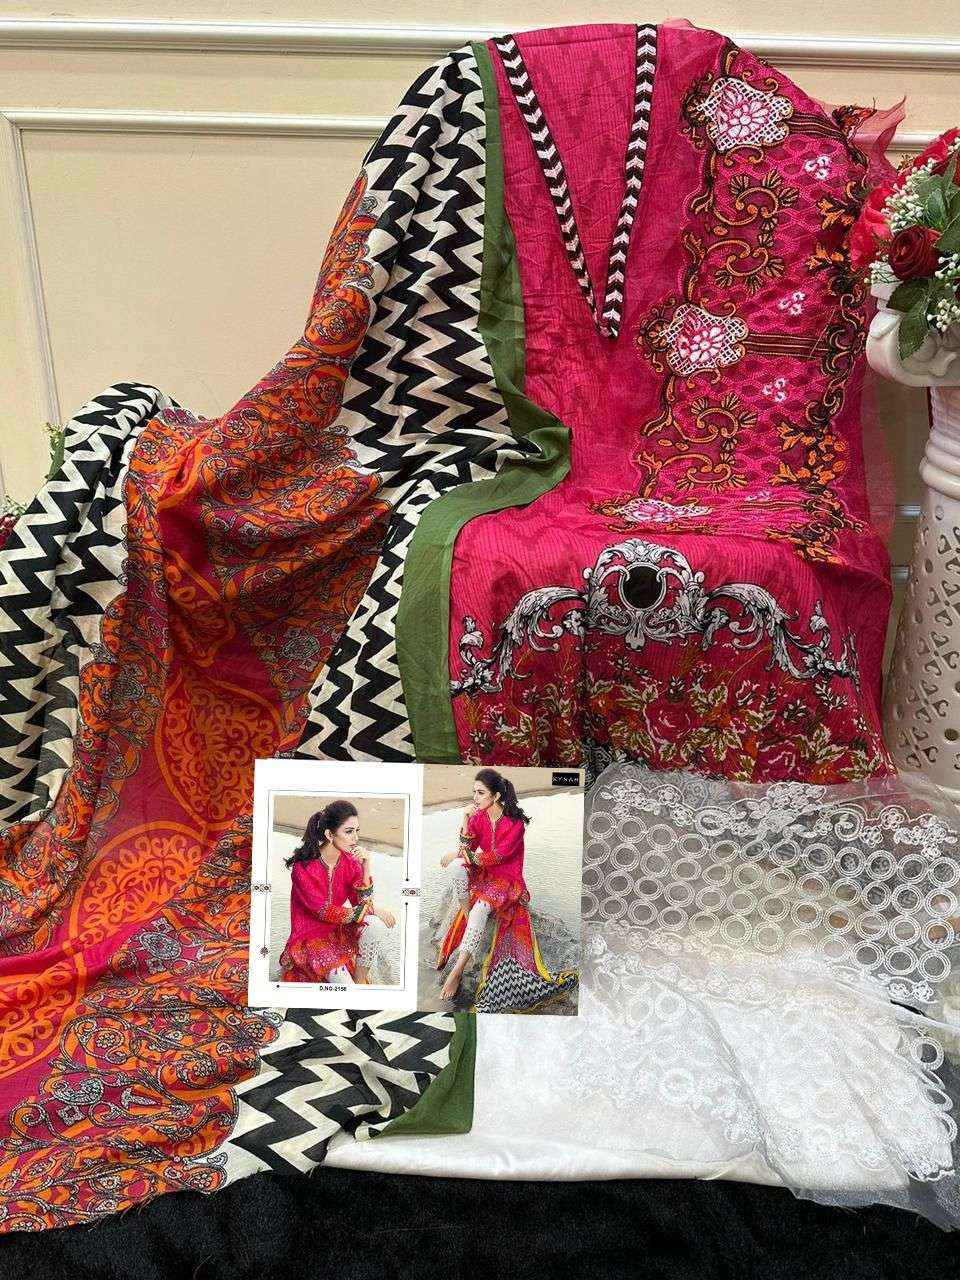 Kynah Maria B Red Rose D No 2156 Cotton Dress Material 2 pcs Catalogue